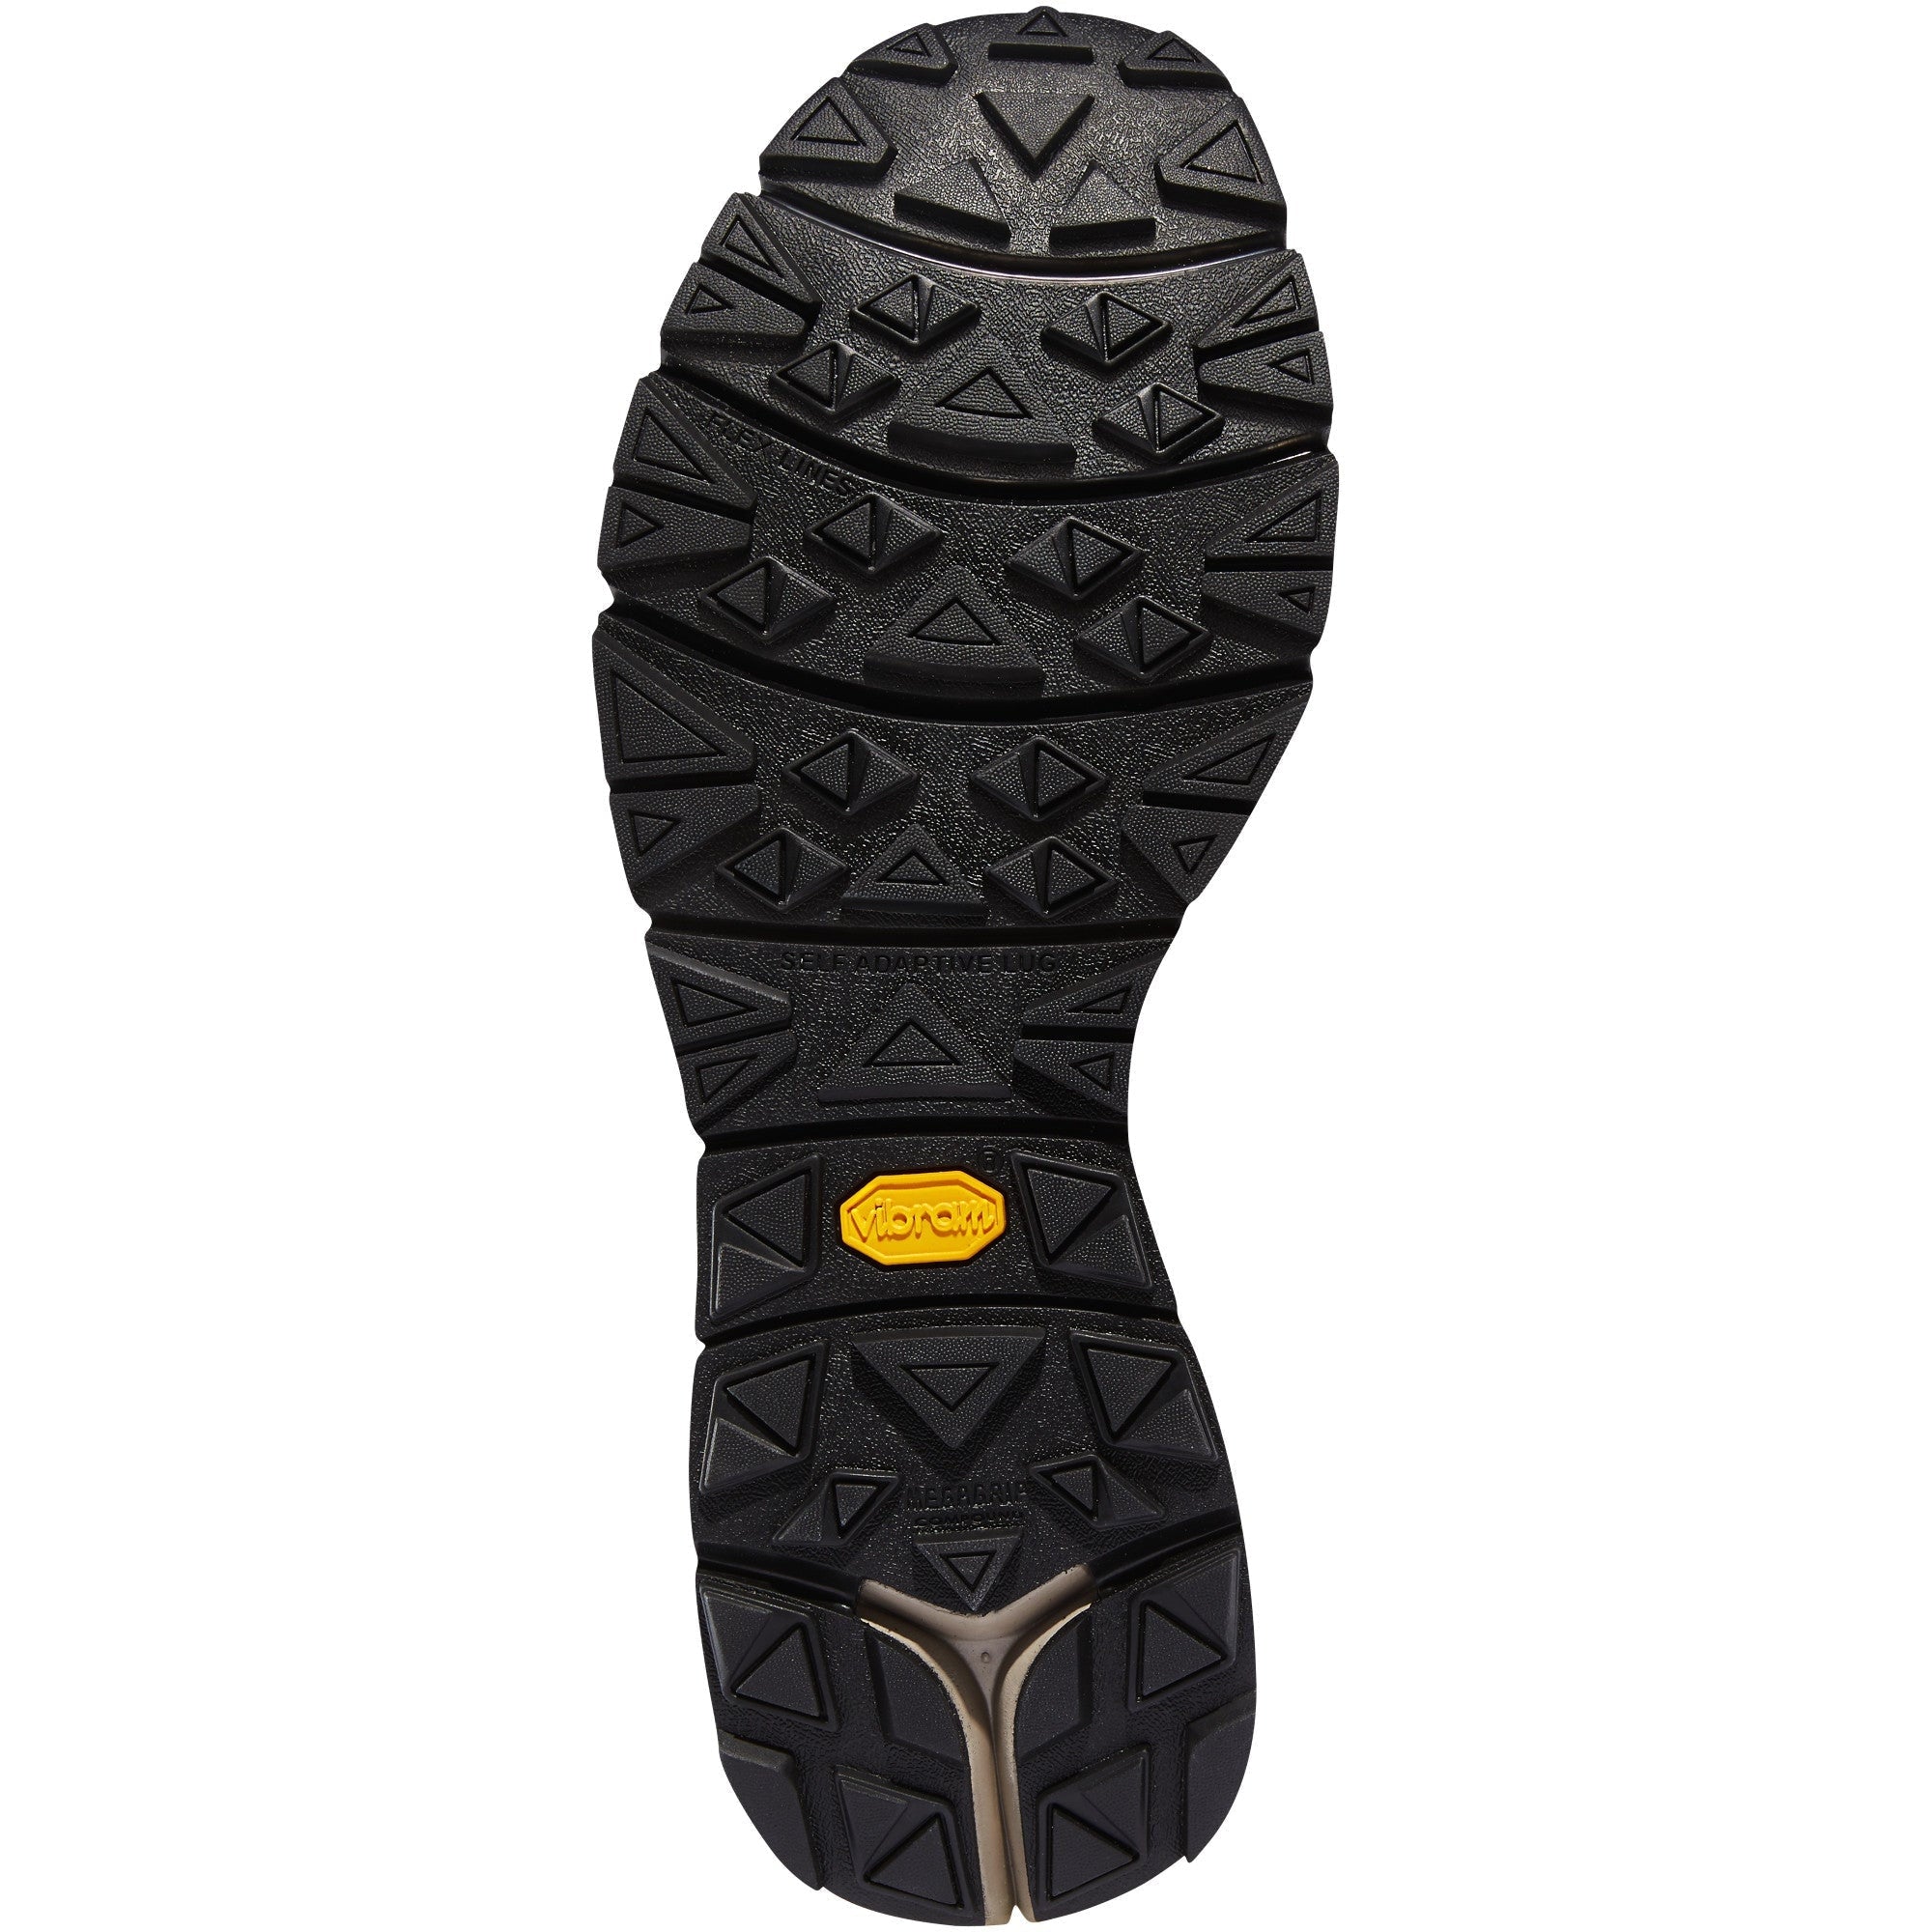 Danner Men's South Rim 600 4" Hiking Boot - Sand - 64310  - Overlook Boots